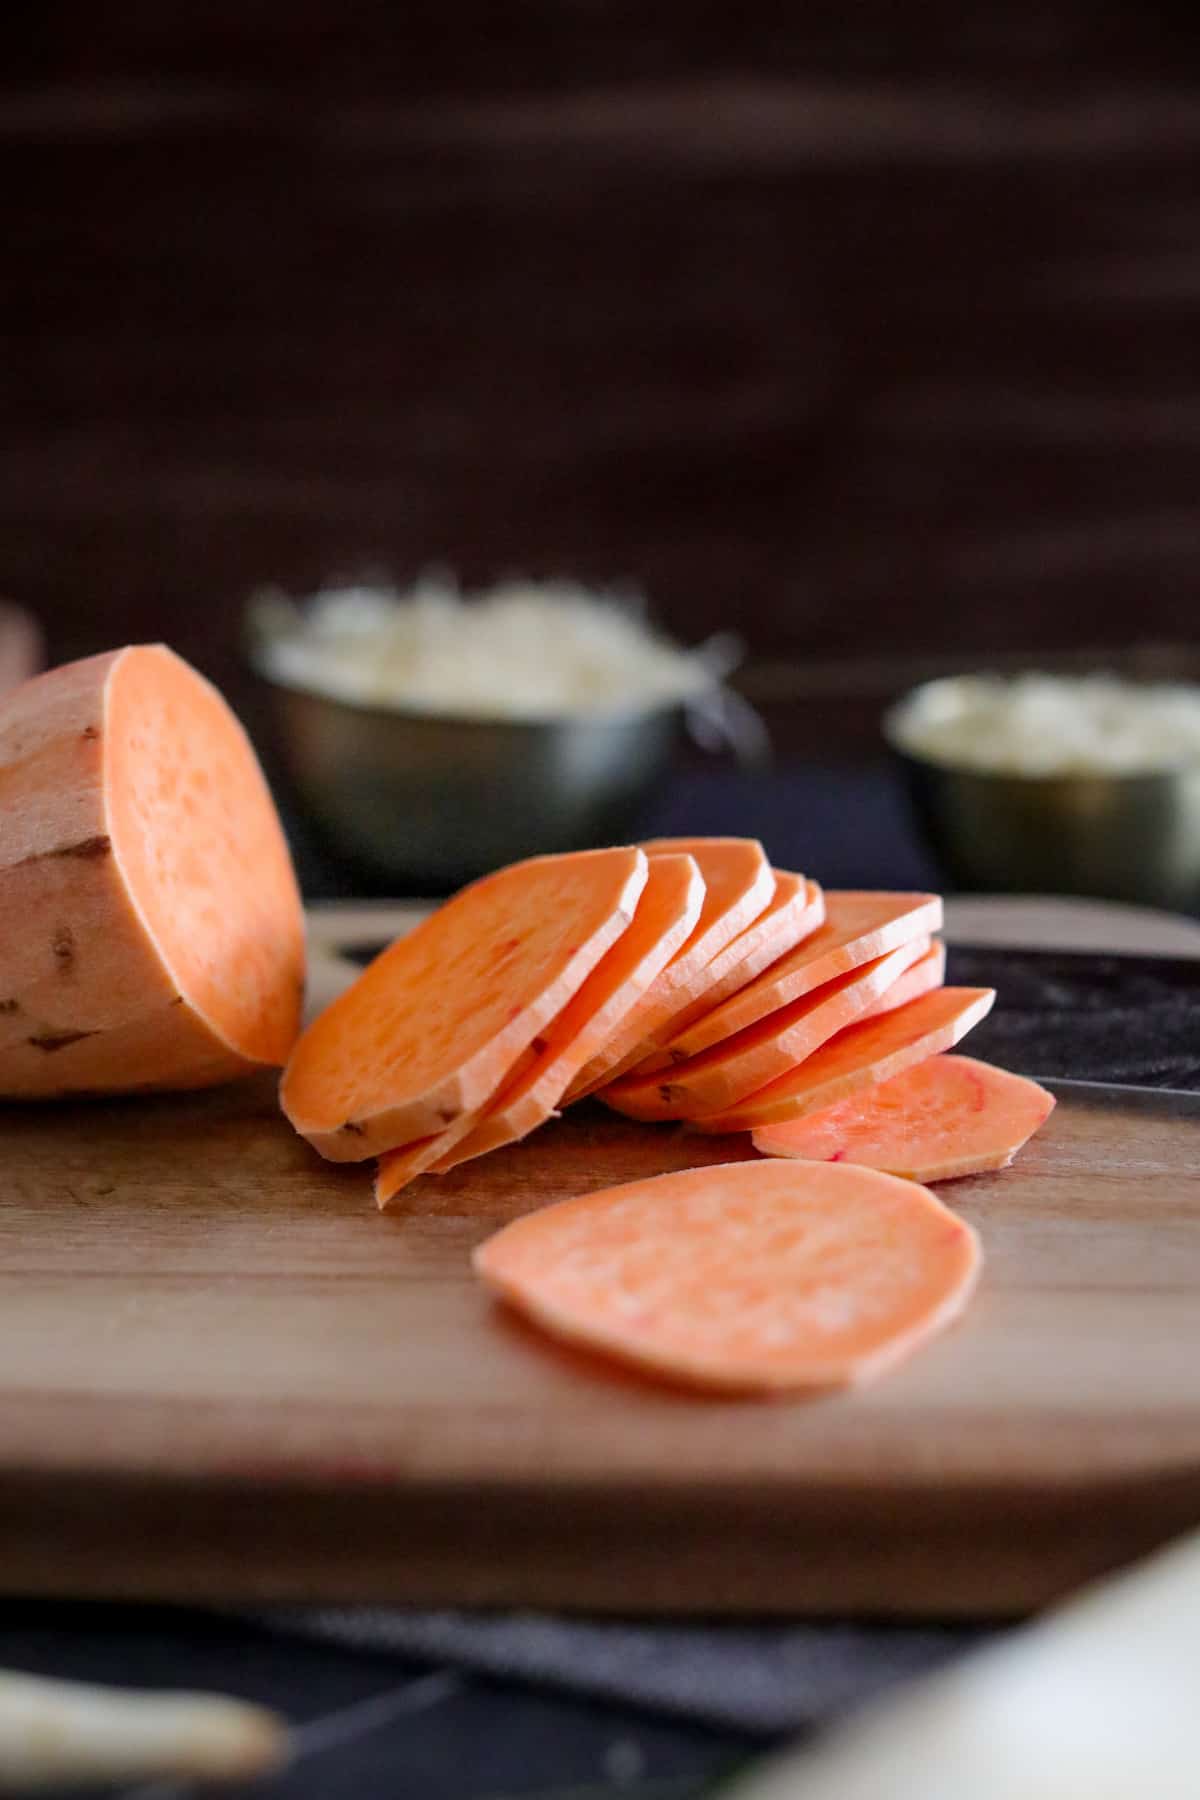 Sliced sweet potato on wood cutting board.